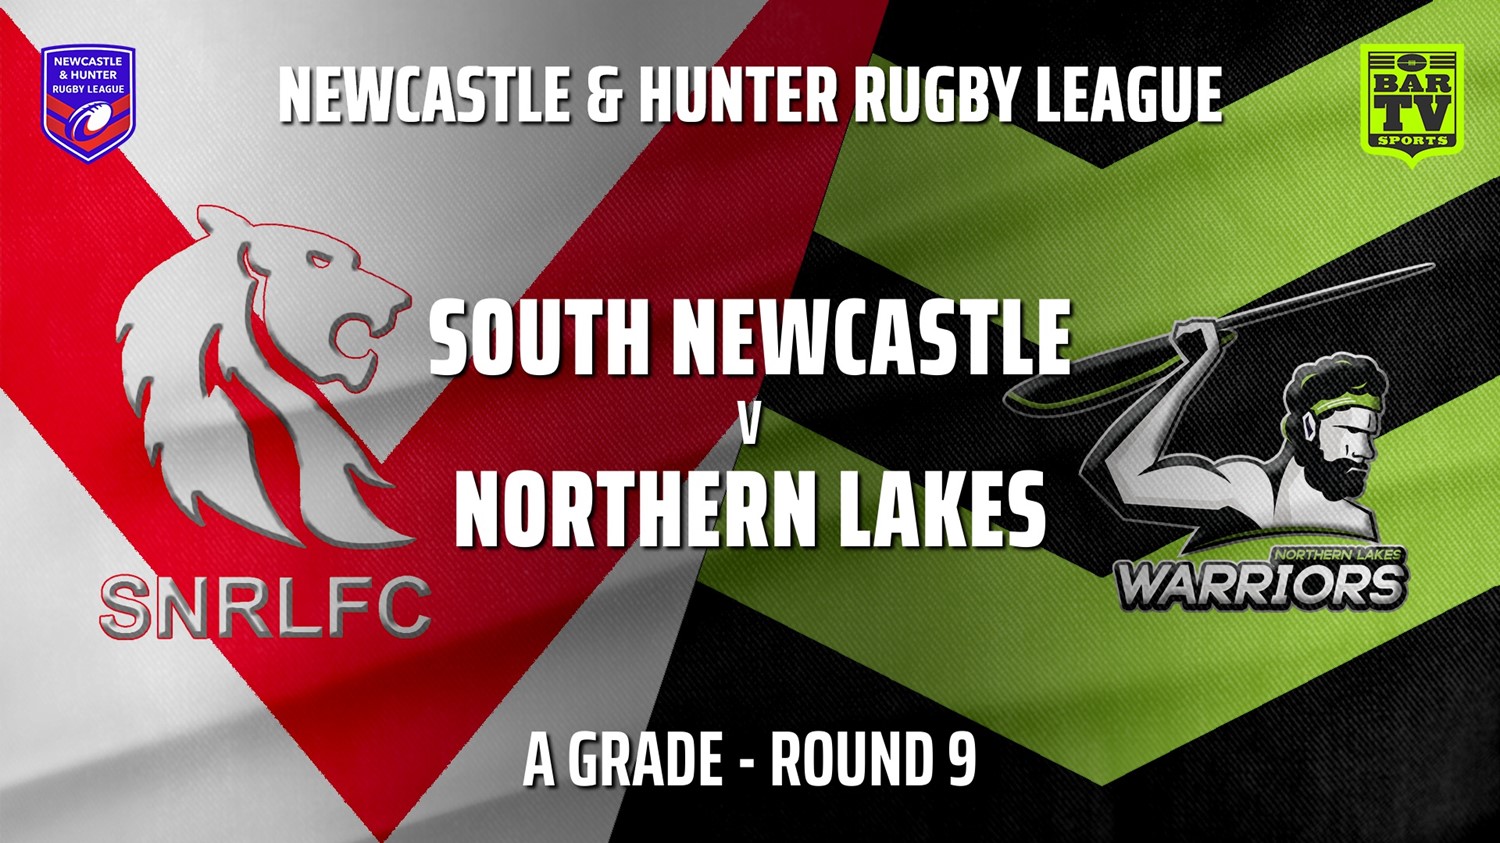 210605-NHRL Round 9 - A Grade - South Newcastle v Northern Lakes Warriors Slate Image